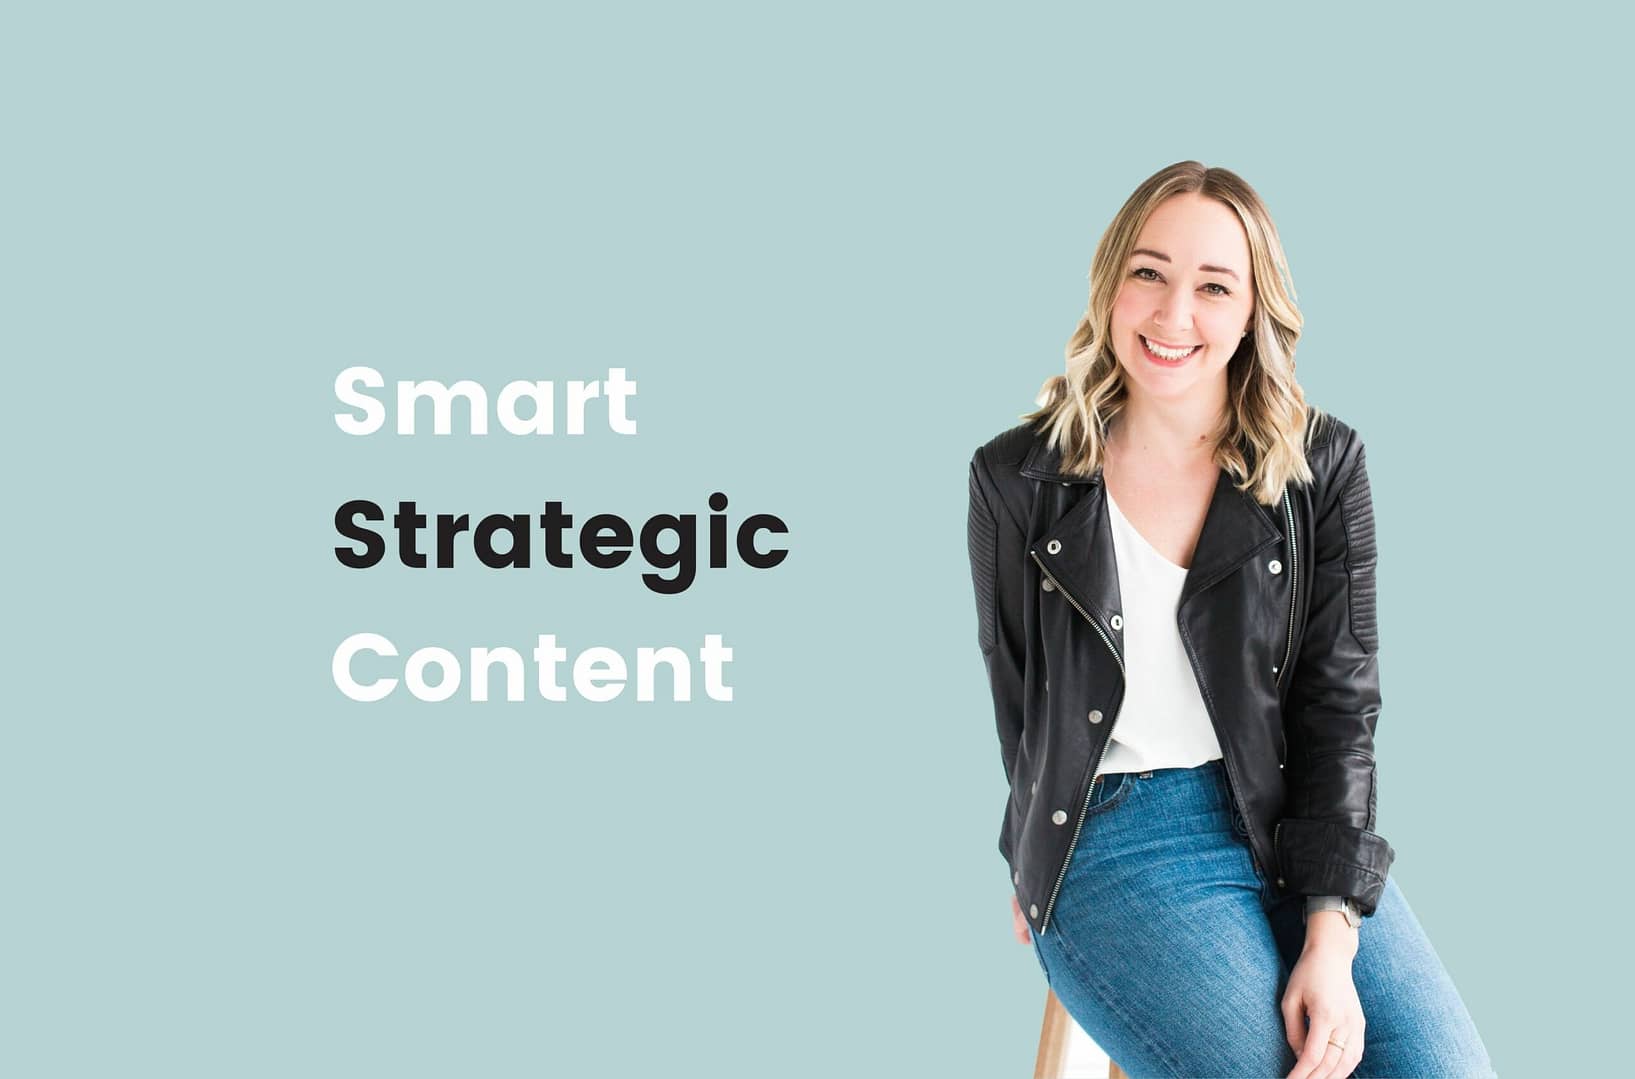 Smart Strategic Content